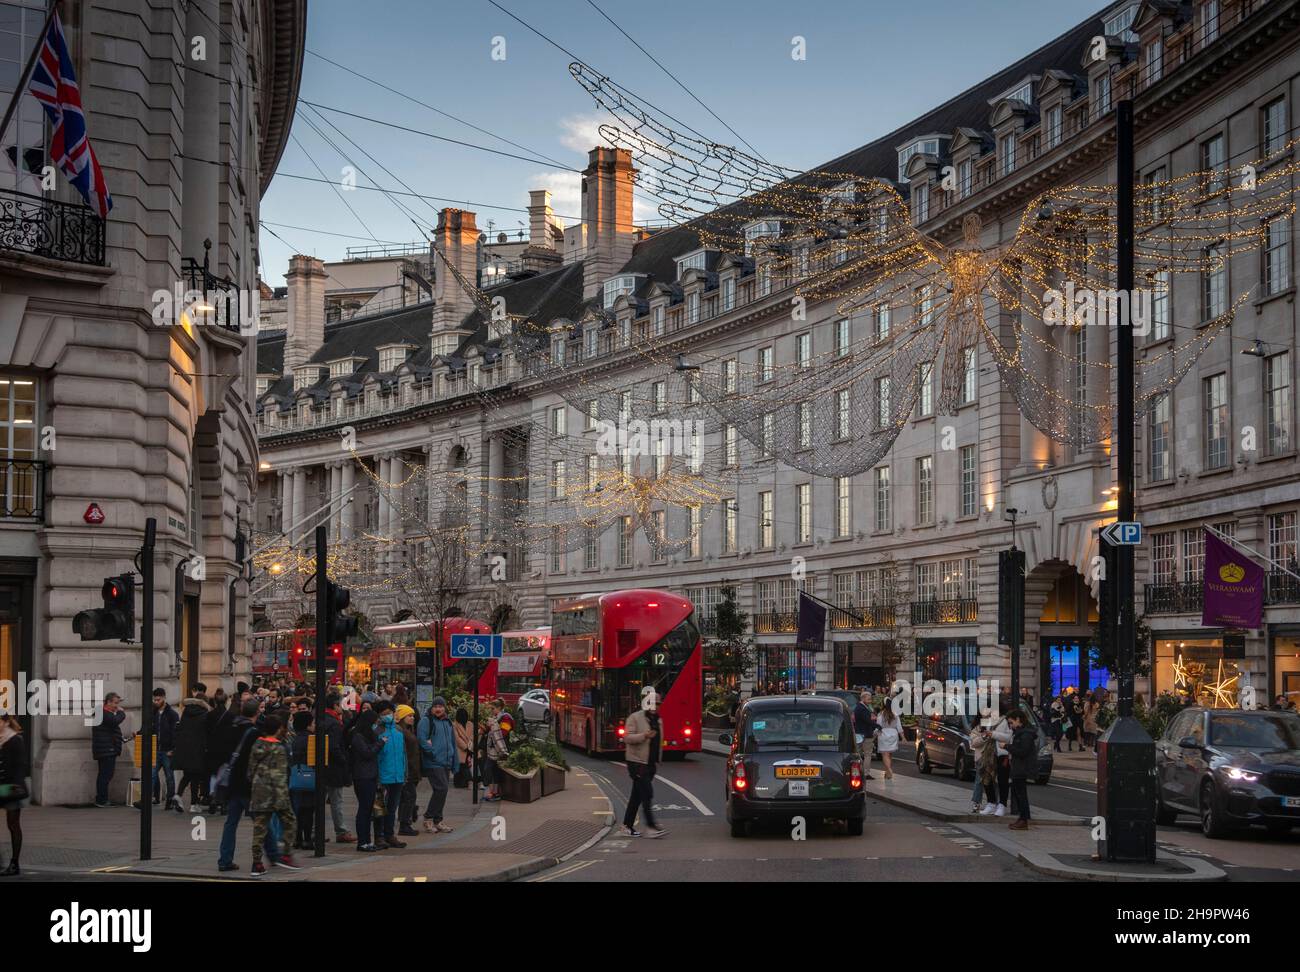 UK, England, London, Regent Street, Christmas illuminations Stock Photo